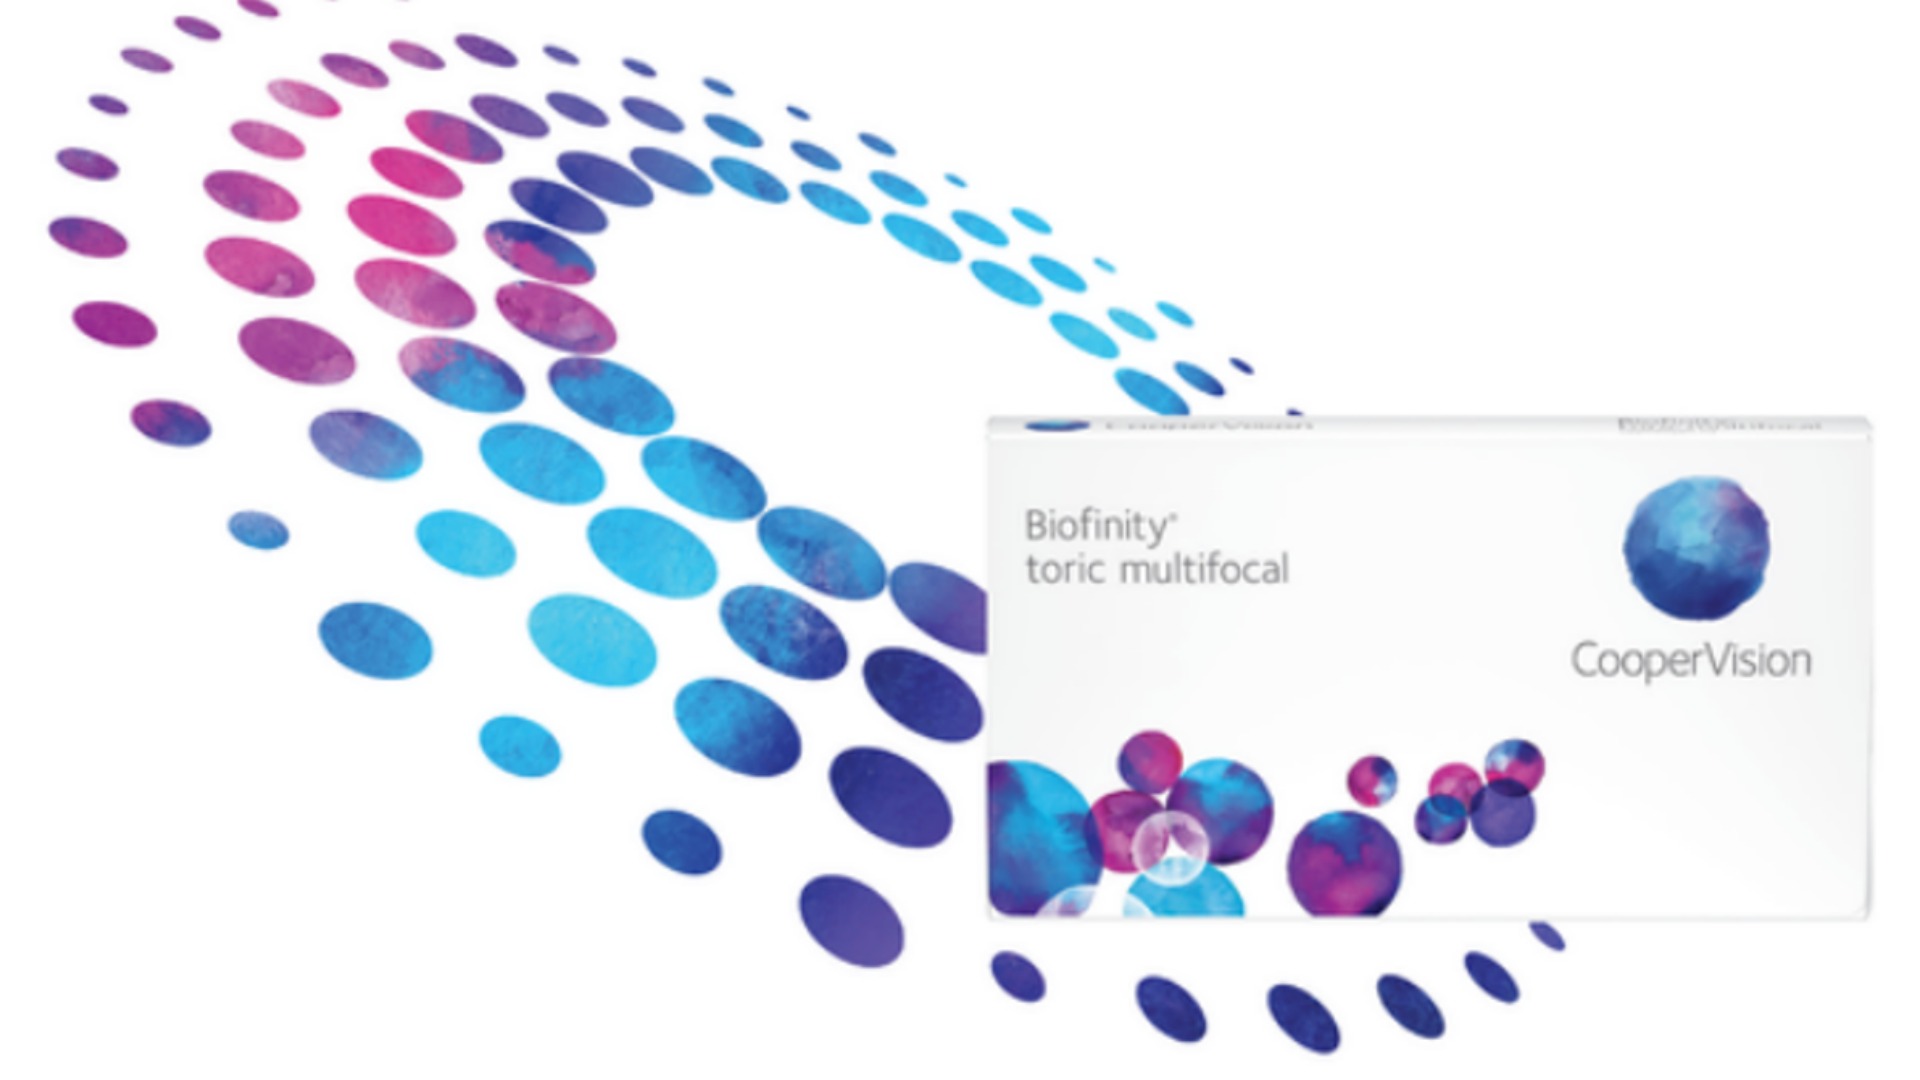 Biofinity Kontaktlinsen Packung und Logo Kurs CooperVision Biofinity toric multifocal